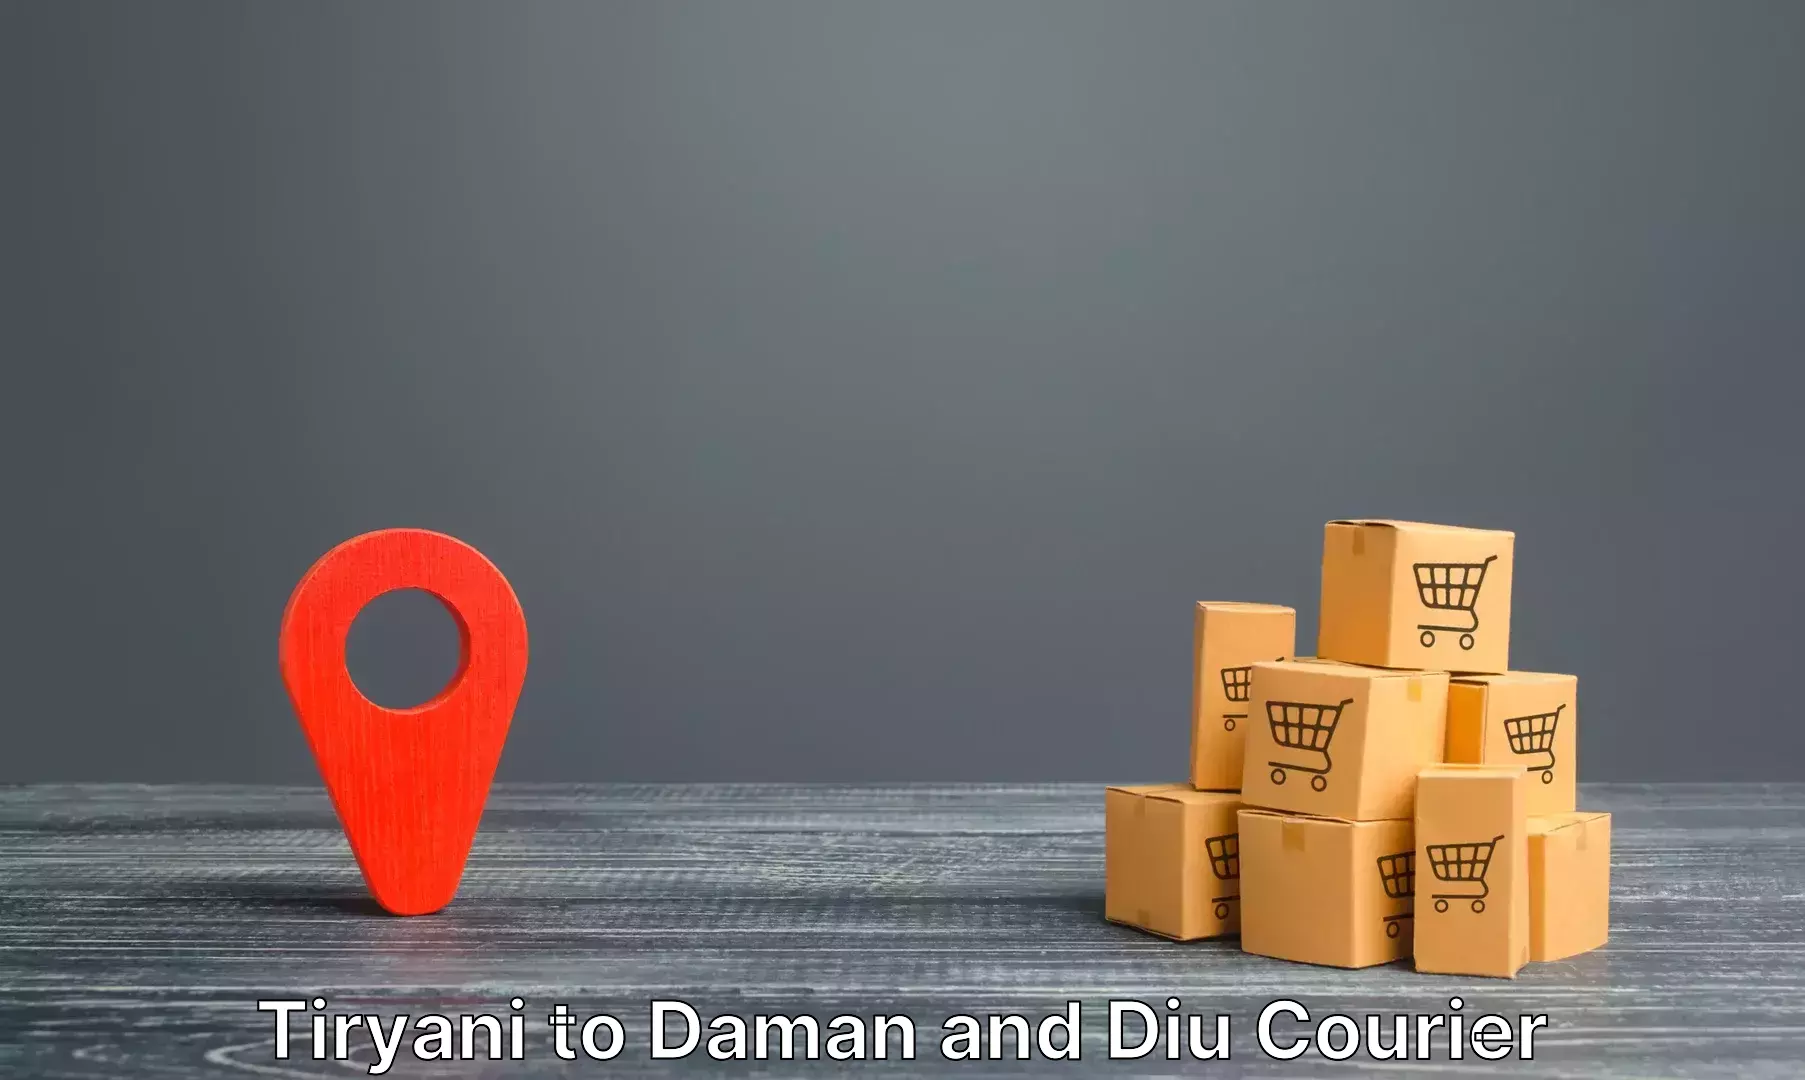 Luggage transport consultancy Tiryani to Daman and Diu